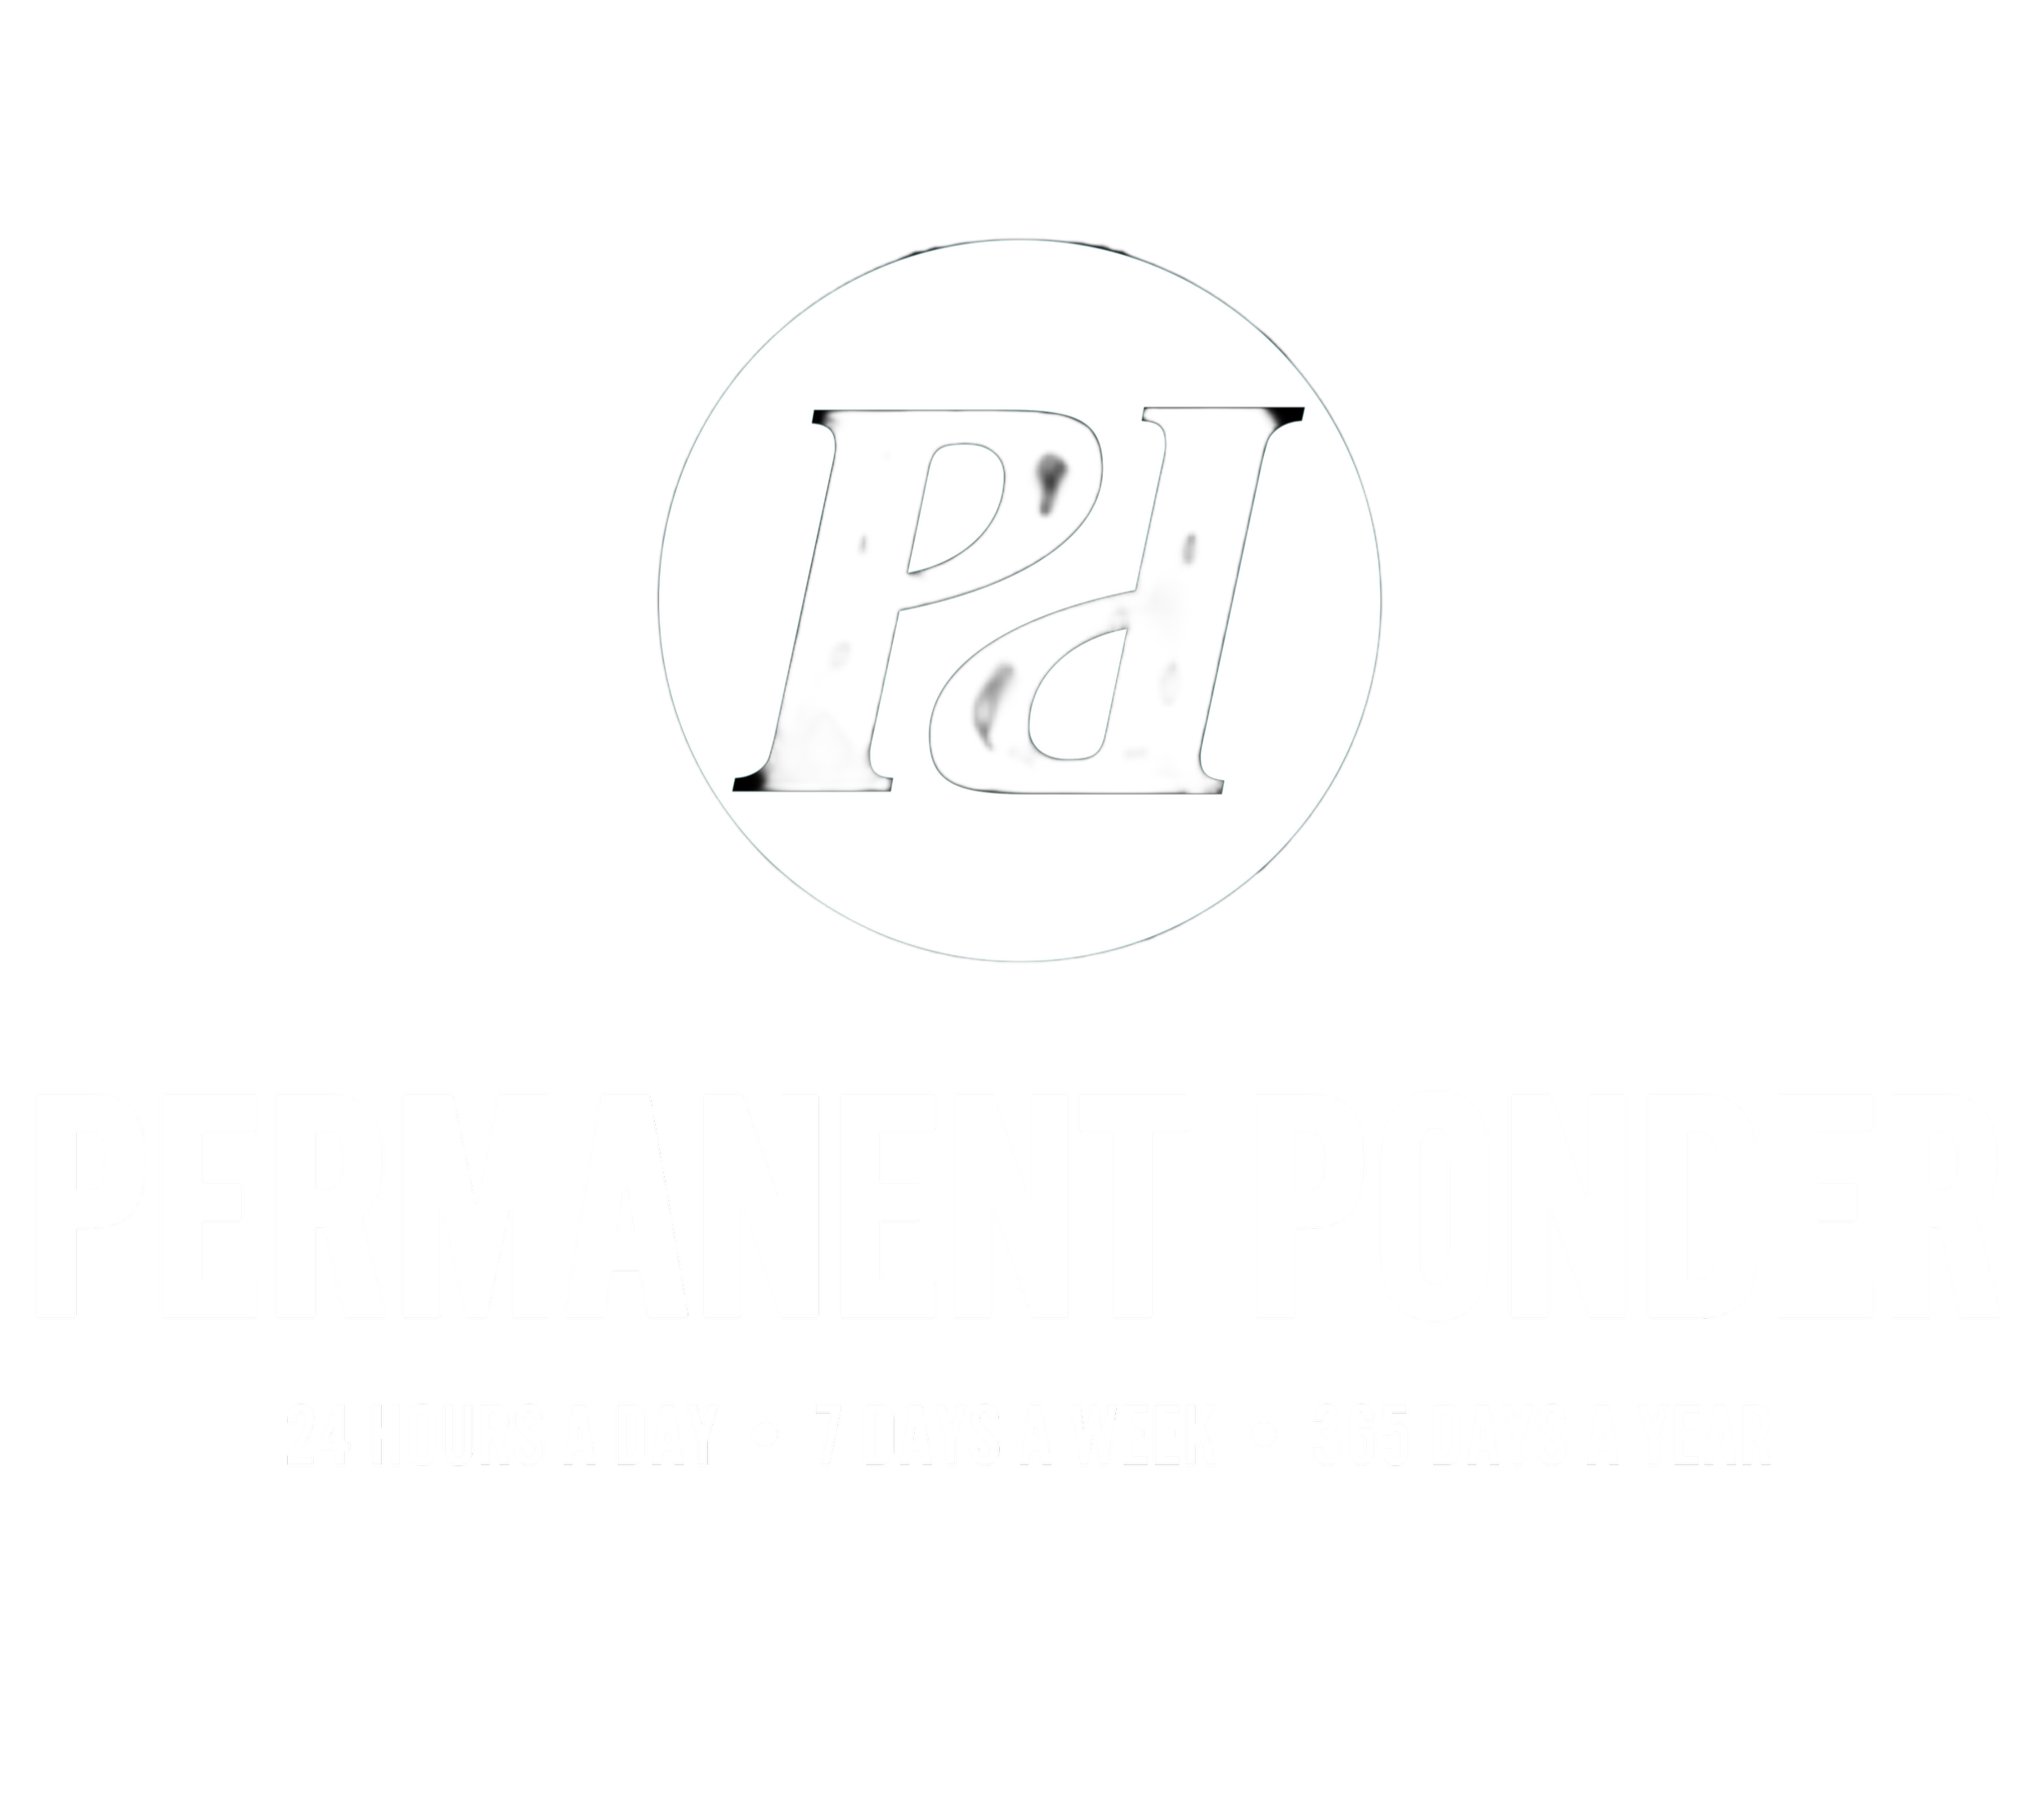 PERMANENT PONDER